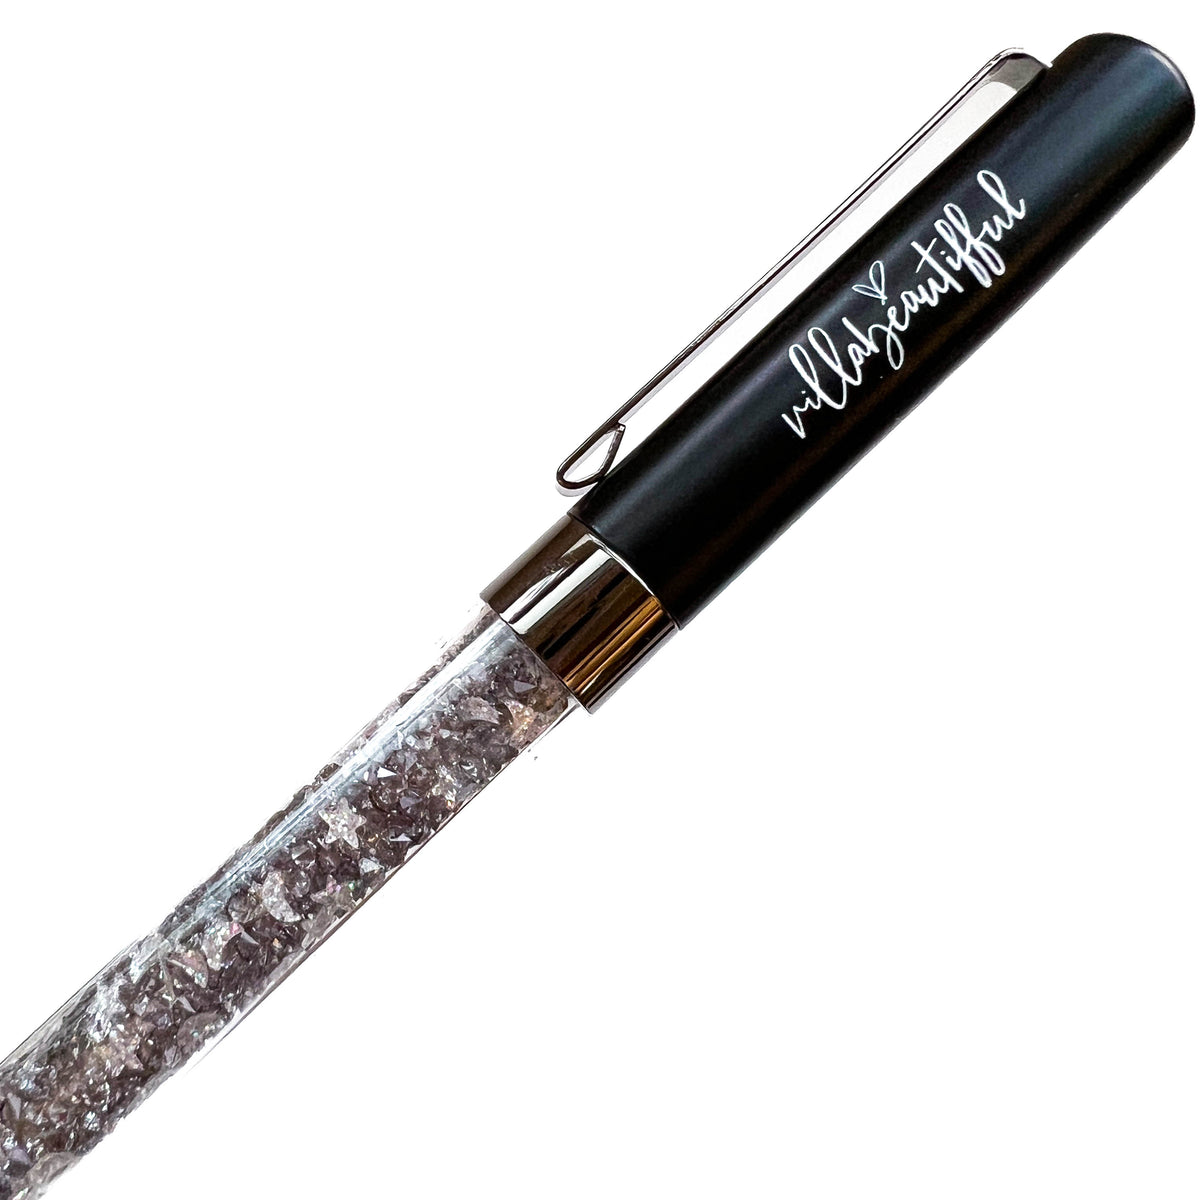 Apothecary Crystal VBPen | limited kit pen